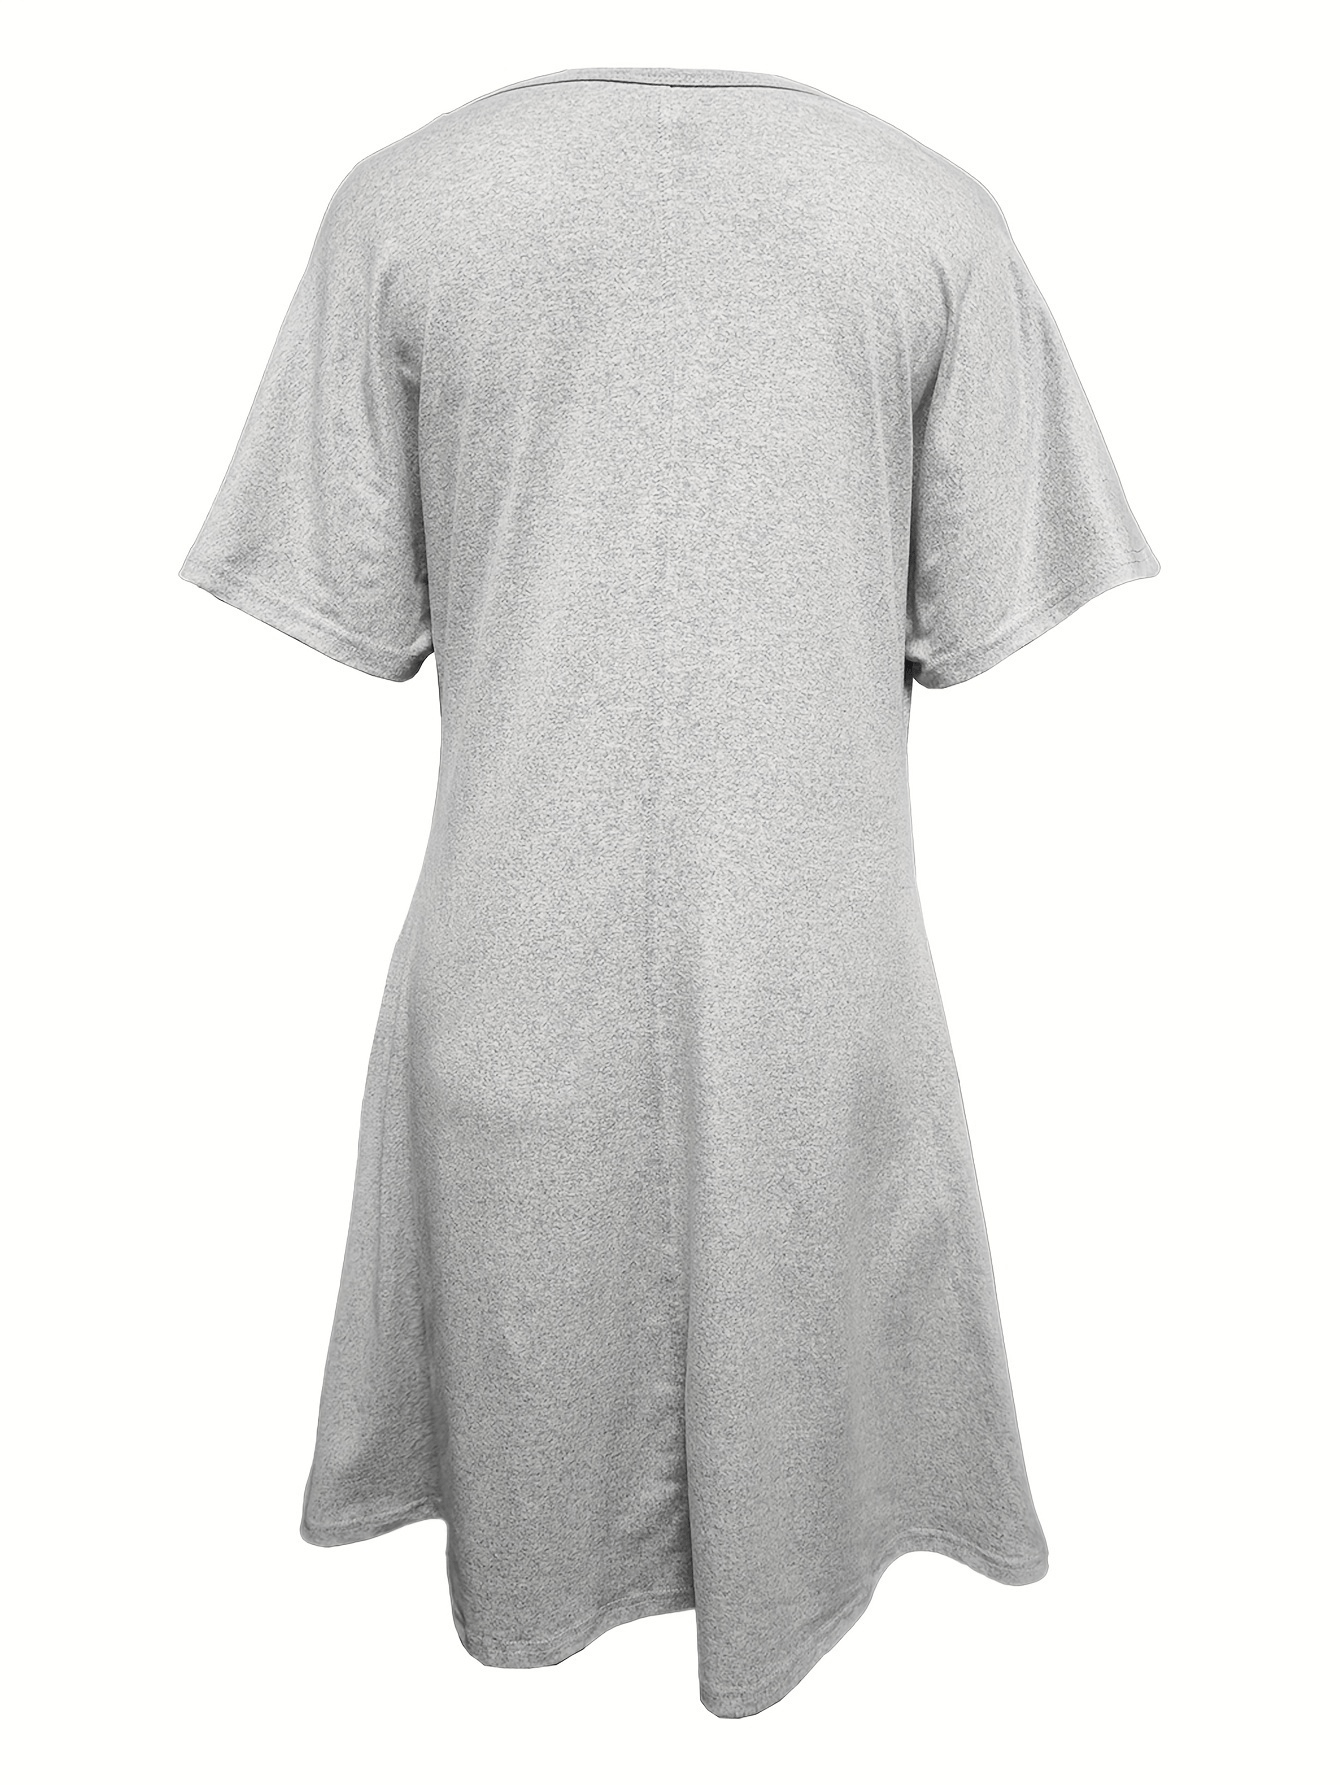 Waymaker Women's Christian Pajama Dress claimedbygoddesigns